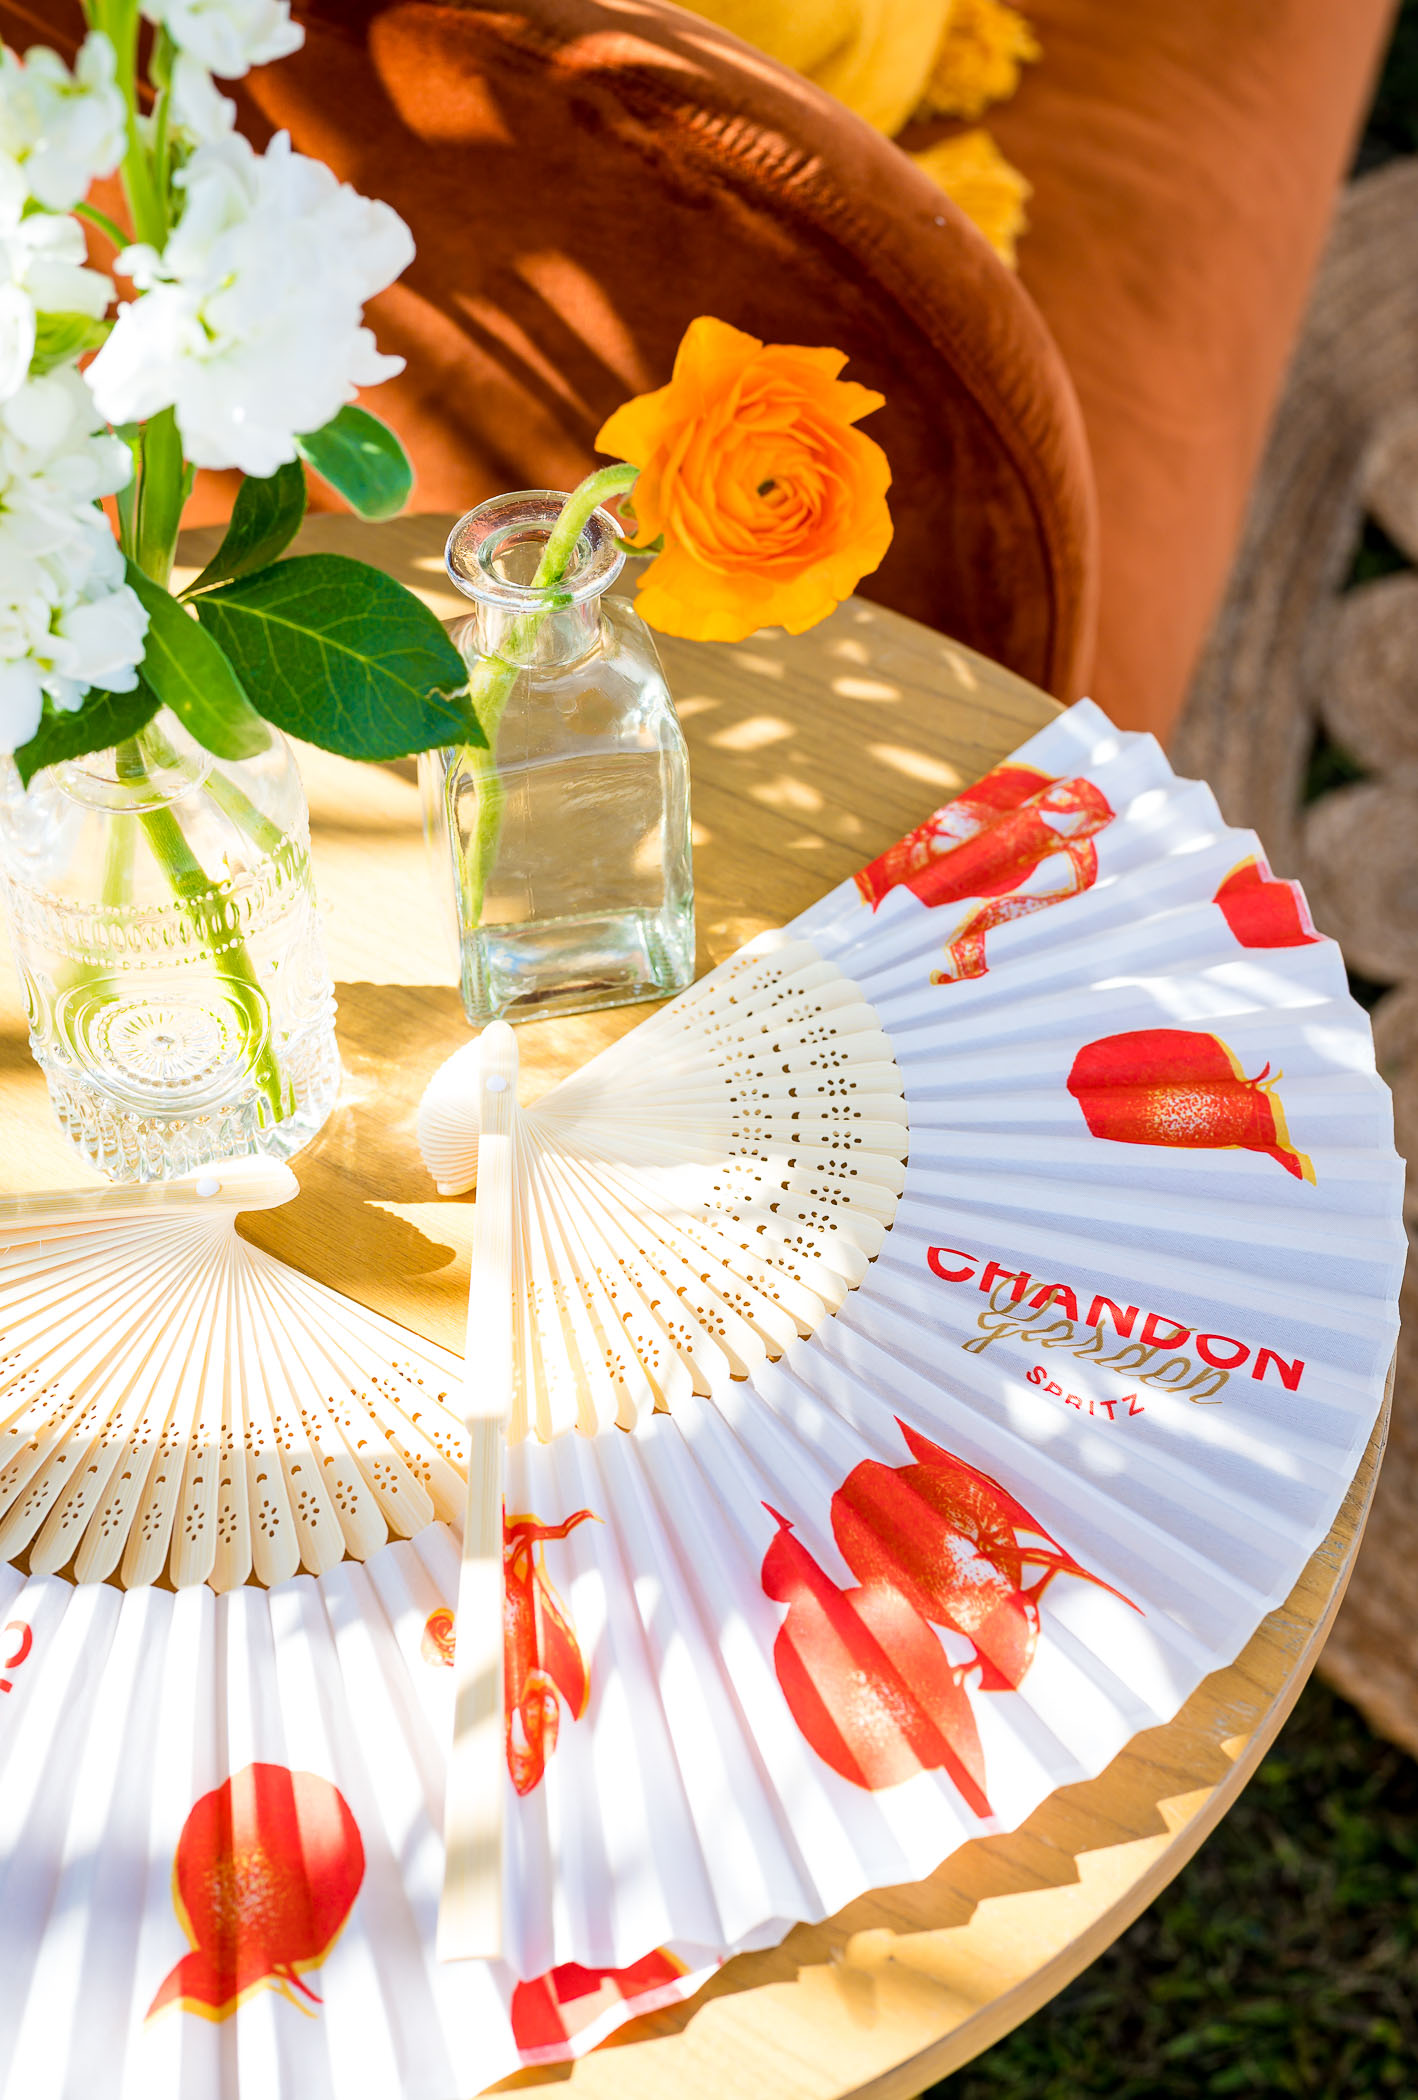 Chandon Garden Spritz branded fan on display table